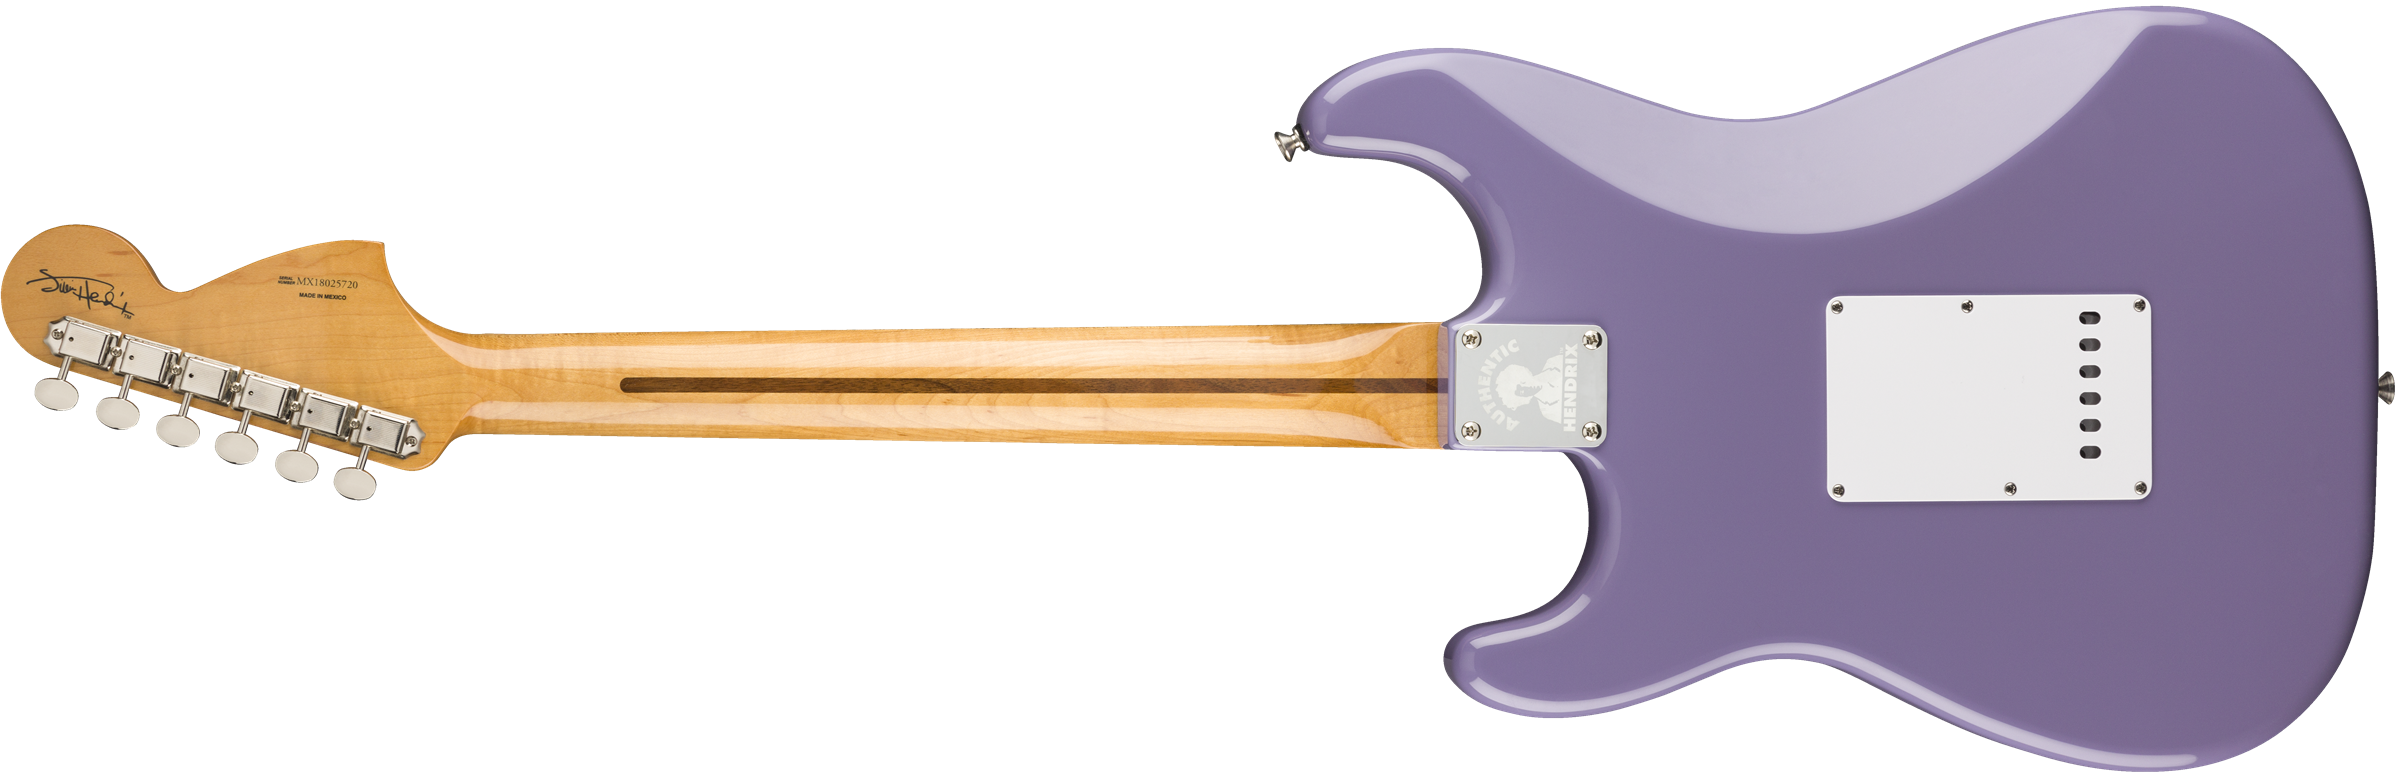 Fender Jimi Hendrix Strat Signature 2018 Mn - Ultra Violet - Guitarra eléctrica con forma de str. - Variation 1